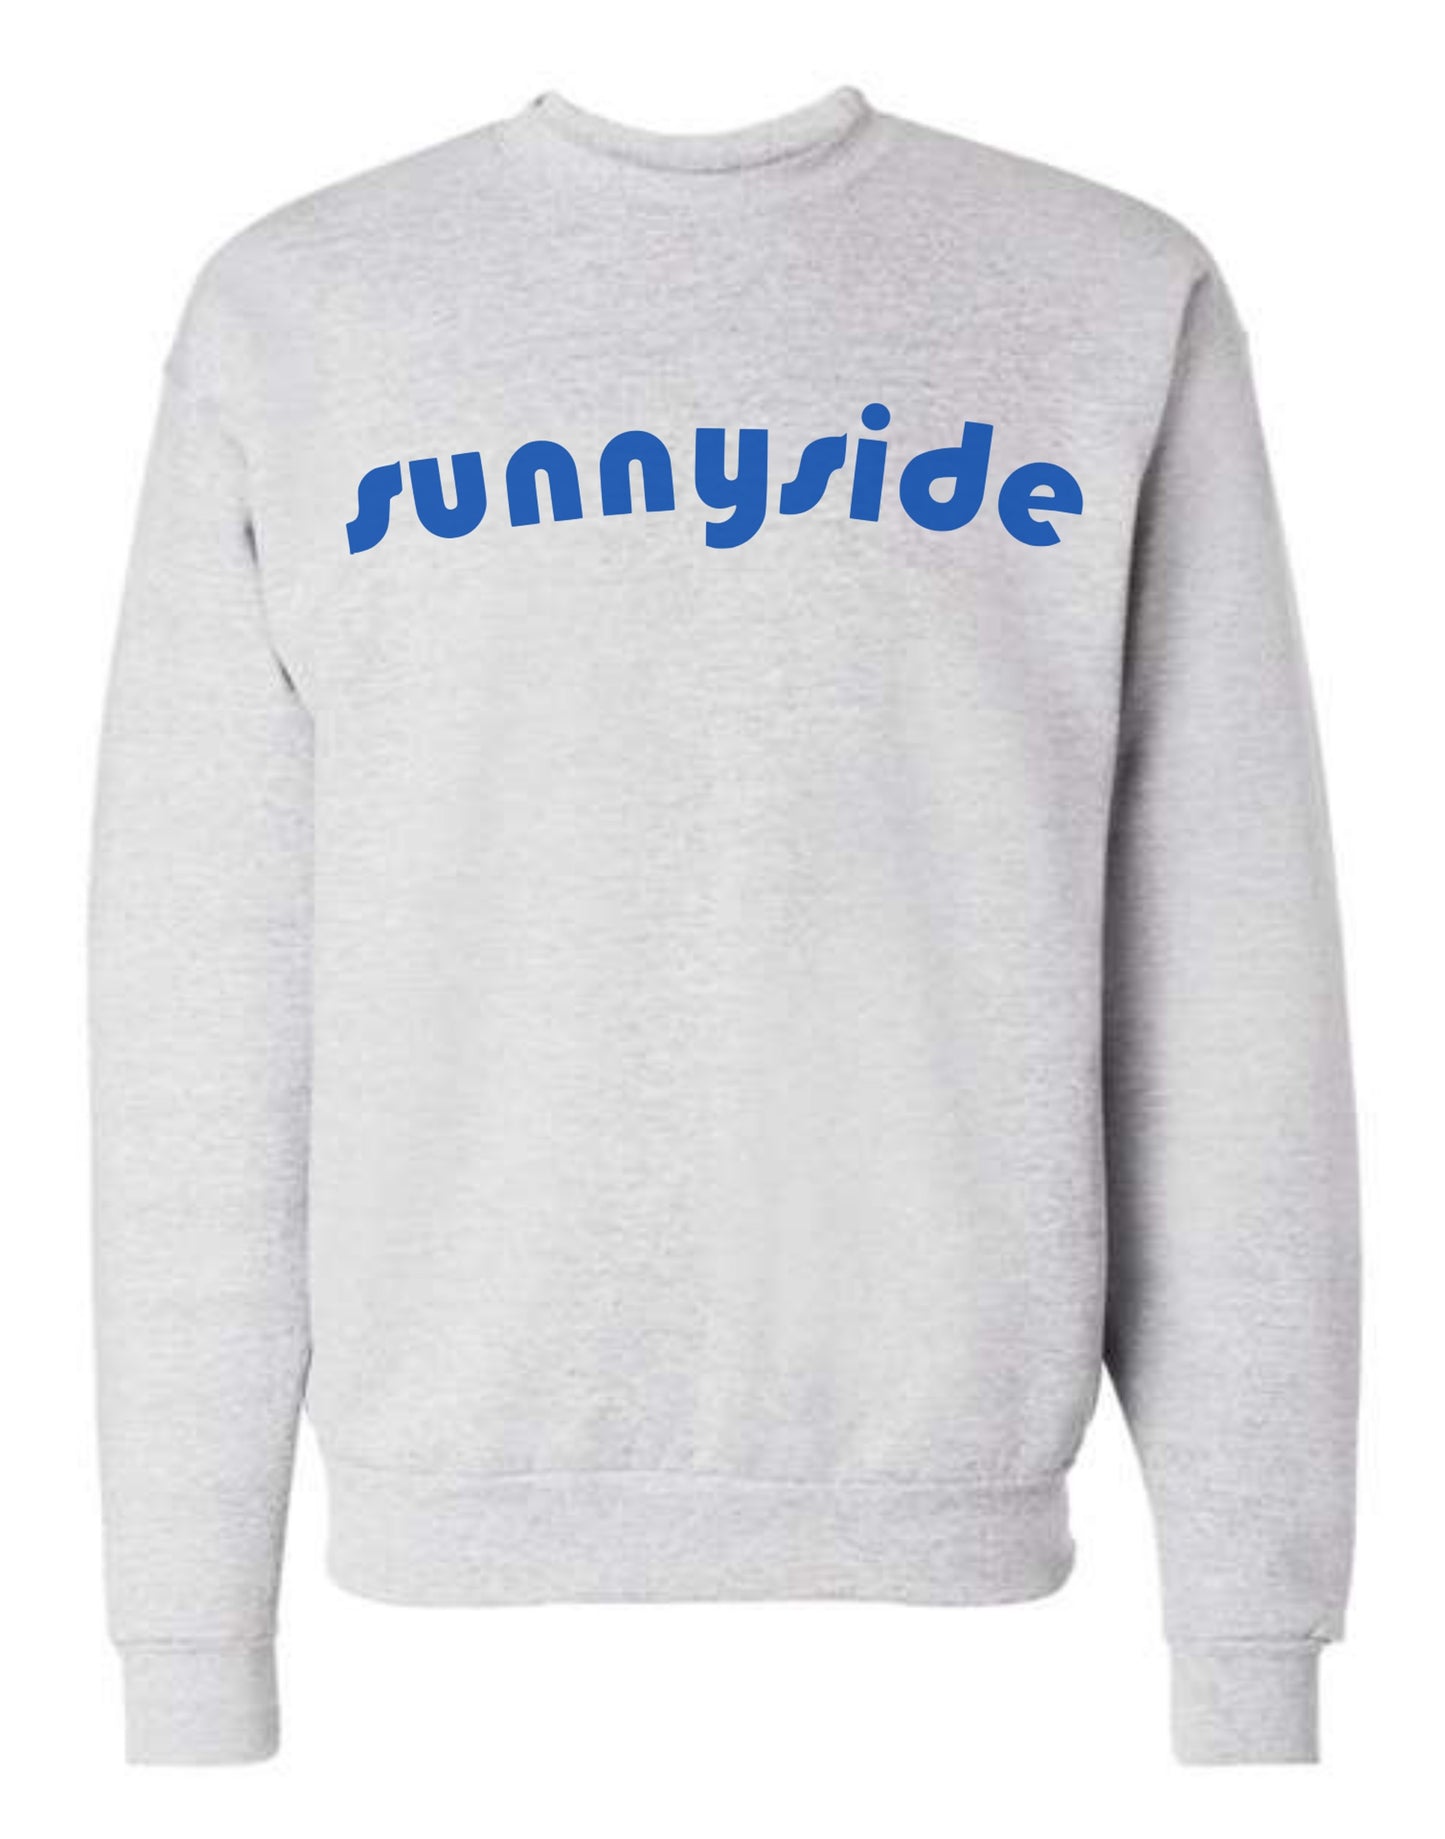 Sunnyside, Queens Sweater